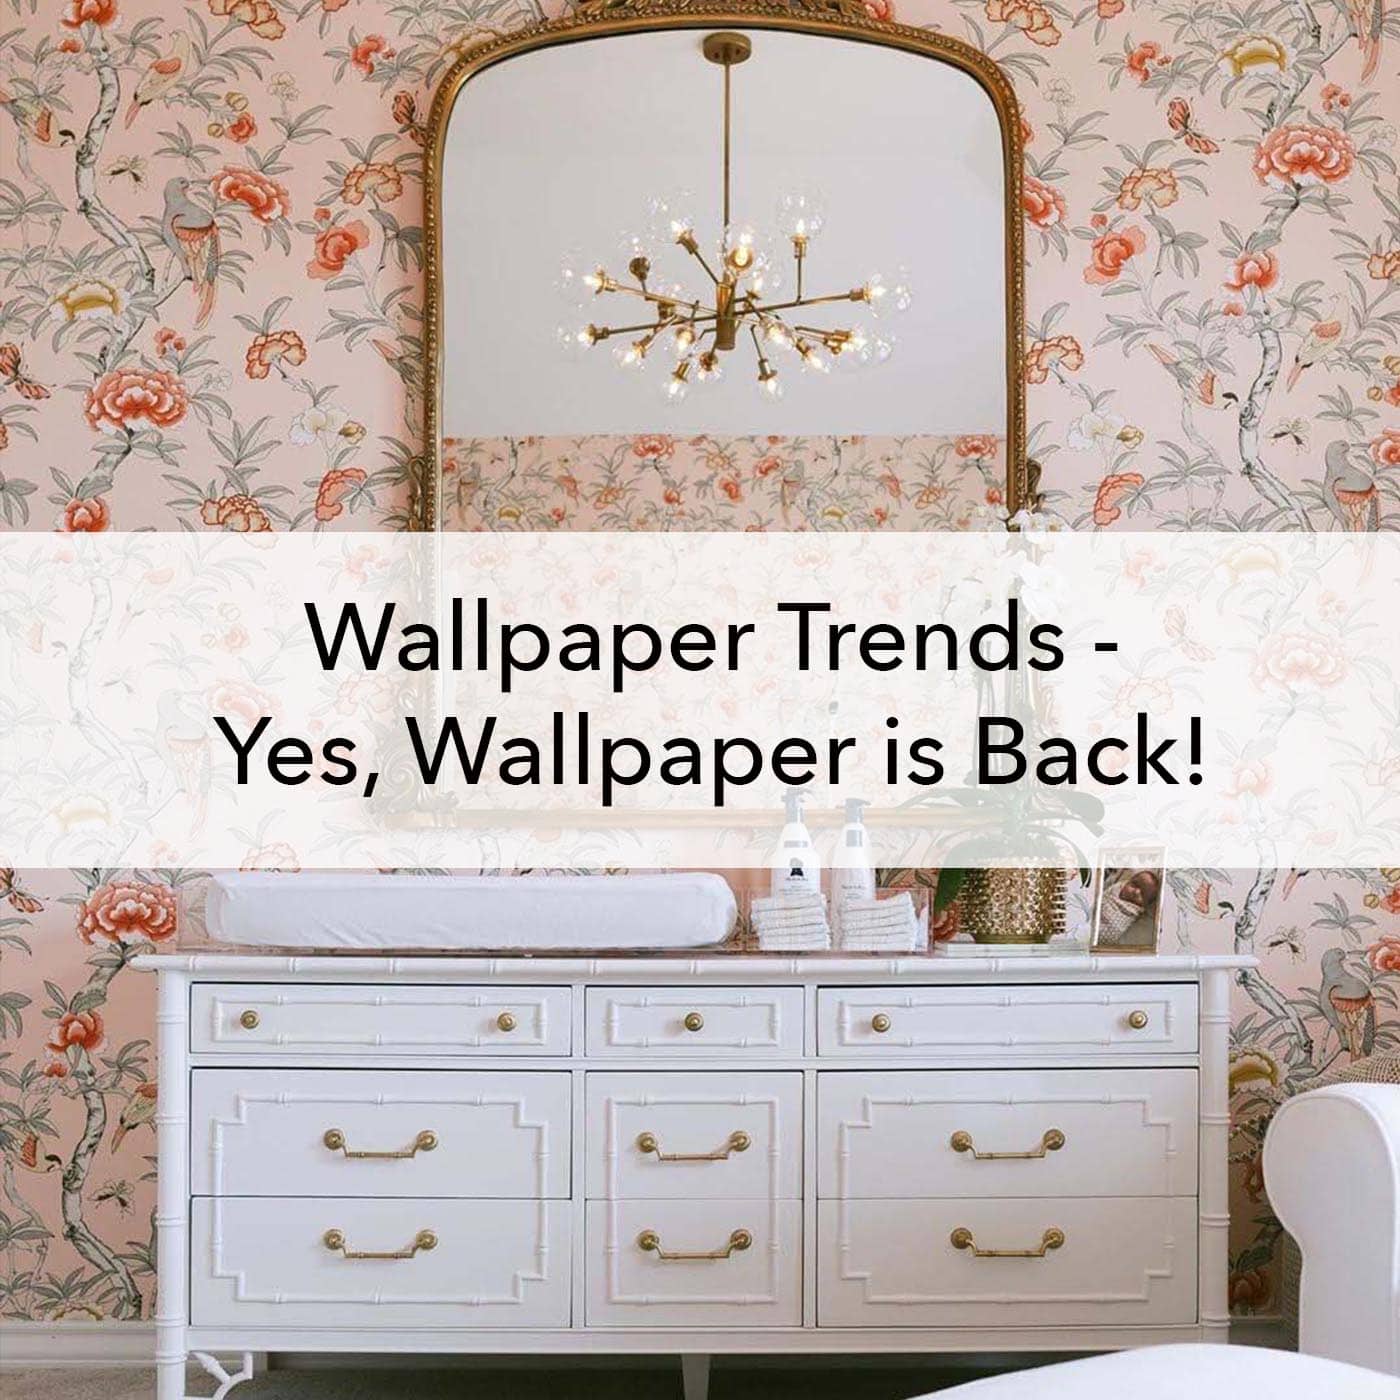 Wallpaper Trends, wallpaper is back, blog